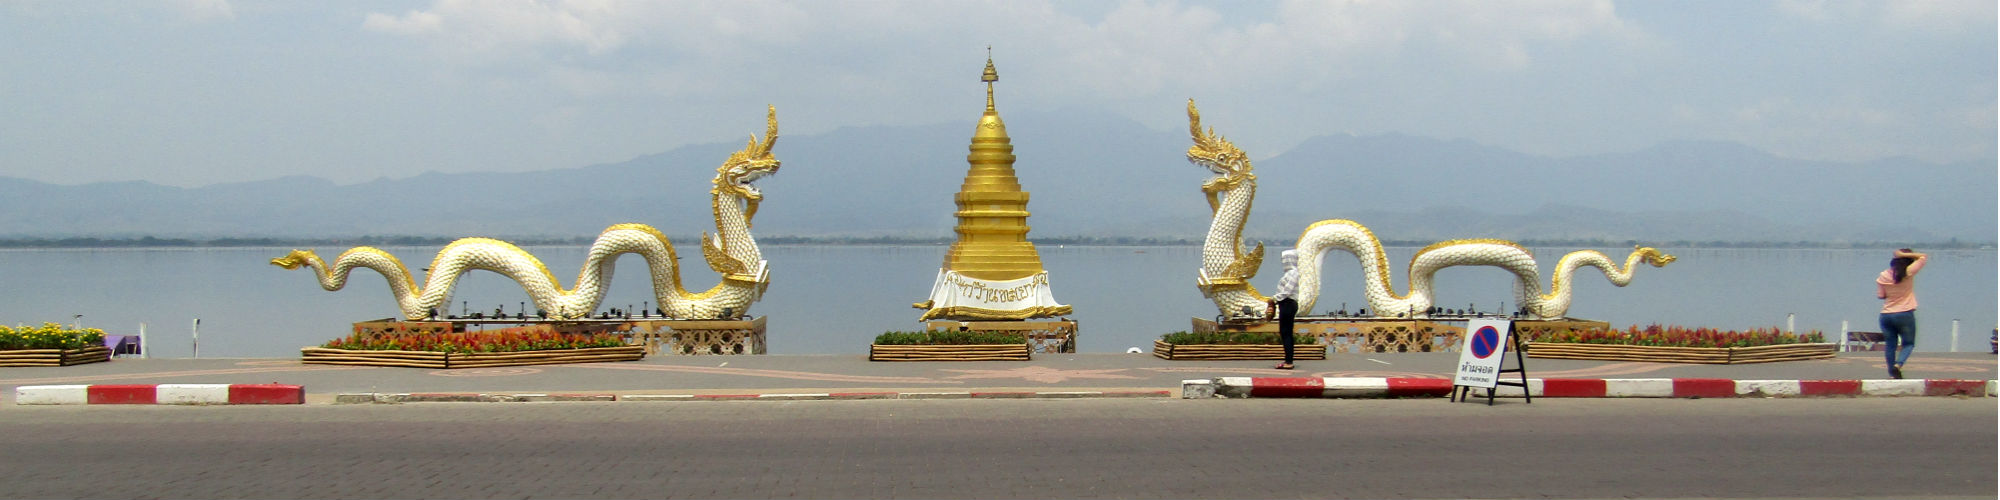 Phayao Lake near the Pho Khun Ngam Mueang Memorial, Phayao